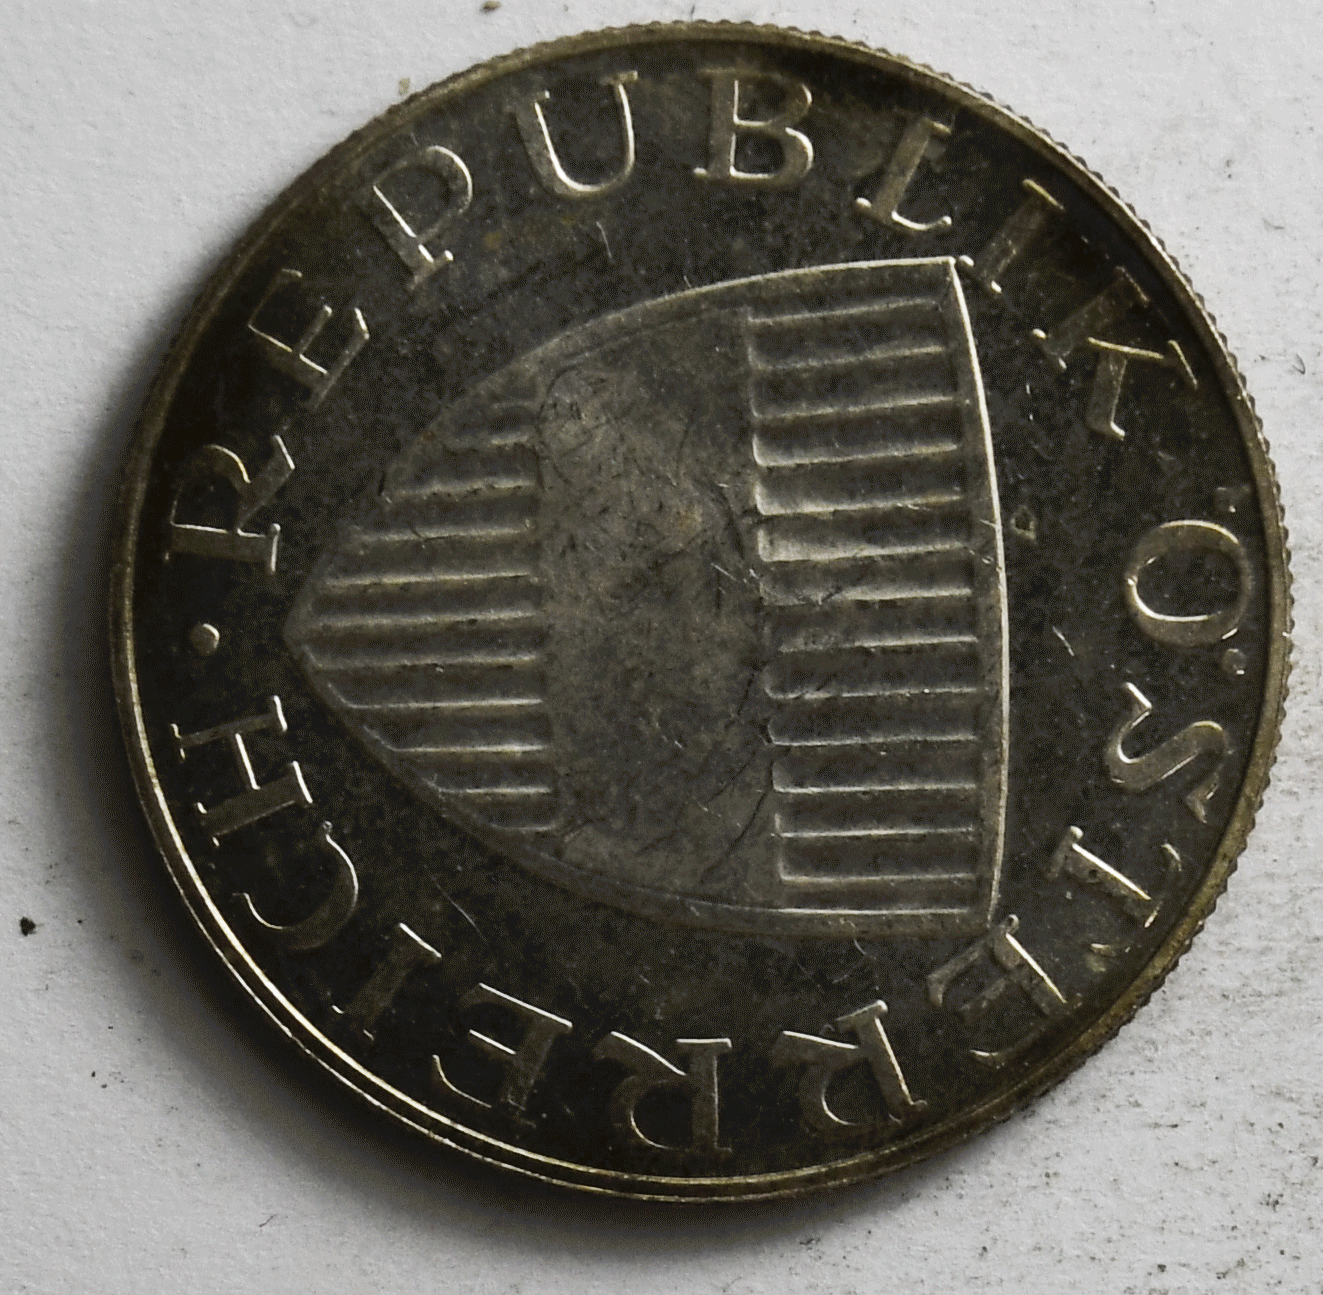 1964 Austria 10 Proof Ten Schilling Silver Coin KM# 2882 Low Mintage